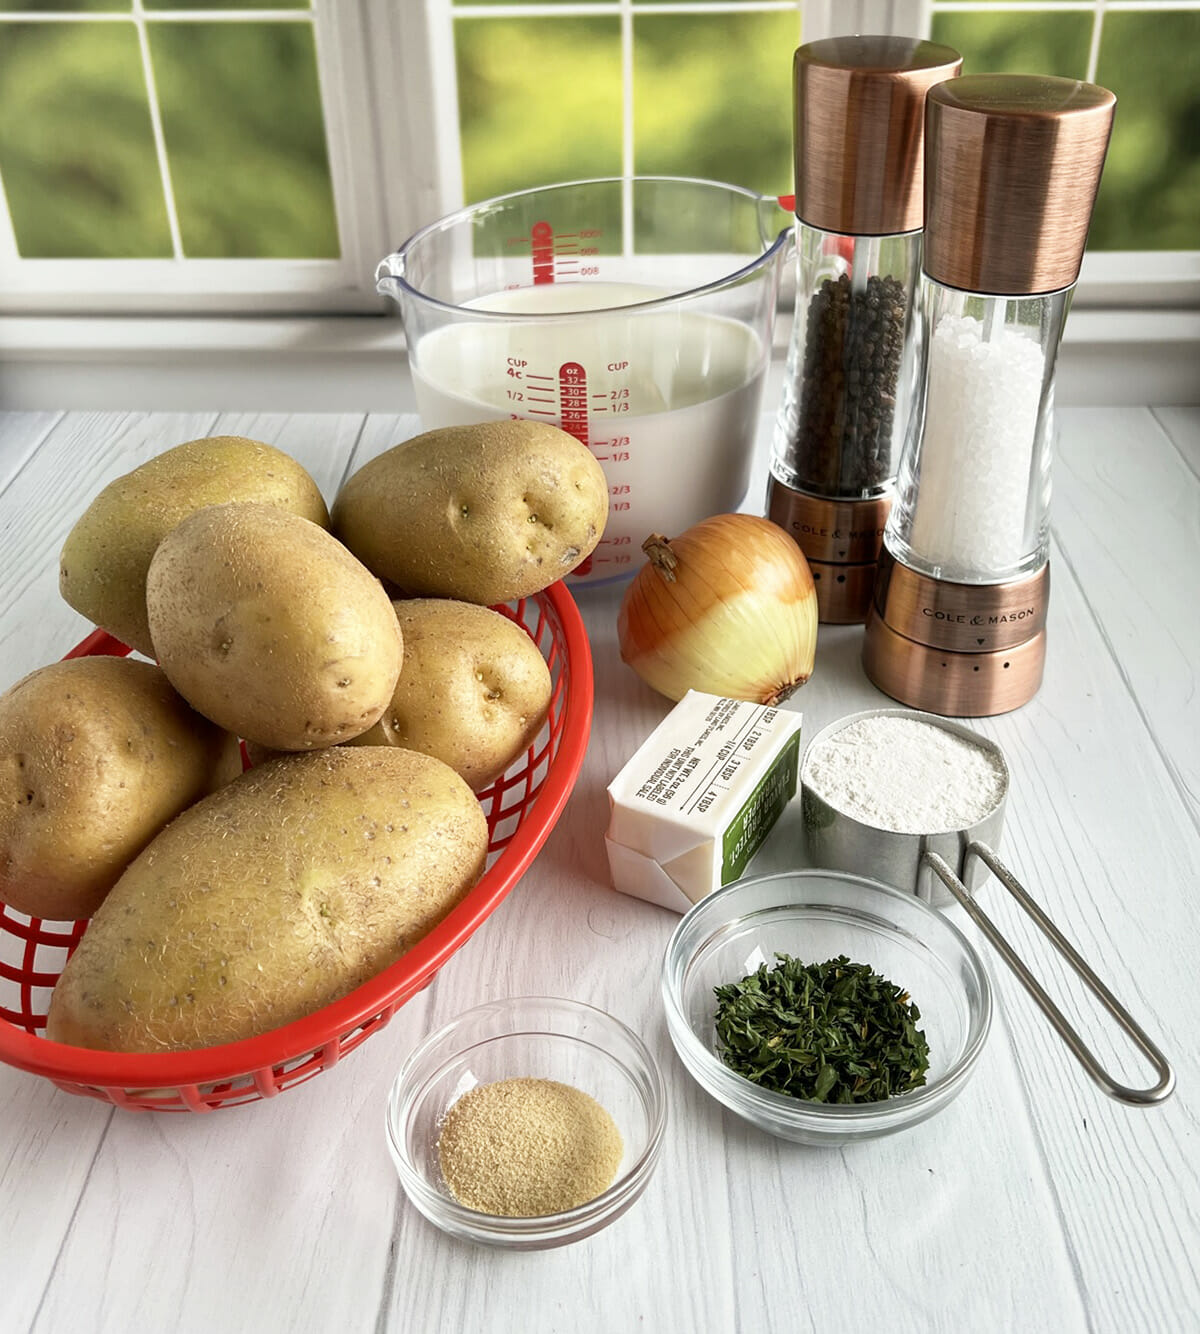 Ingredients to make Jean's scalloped potatoes